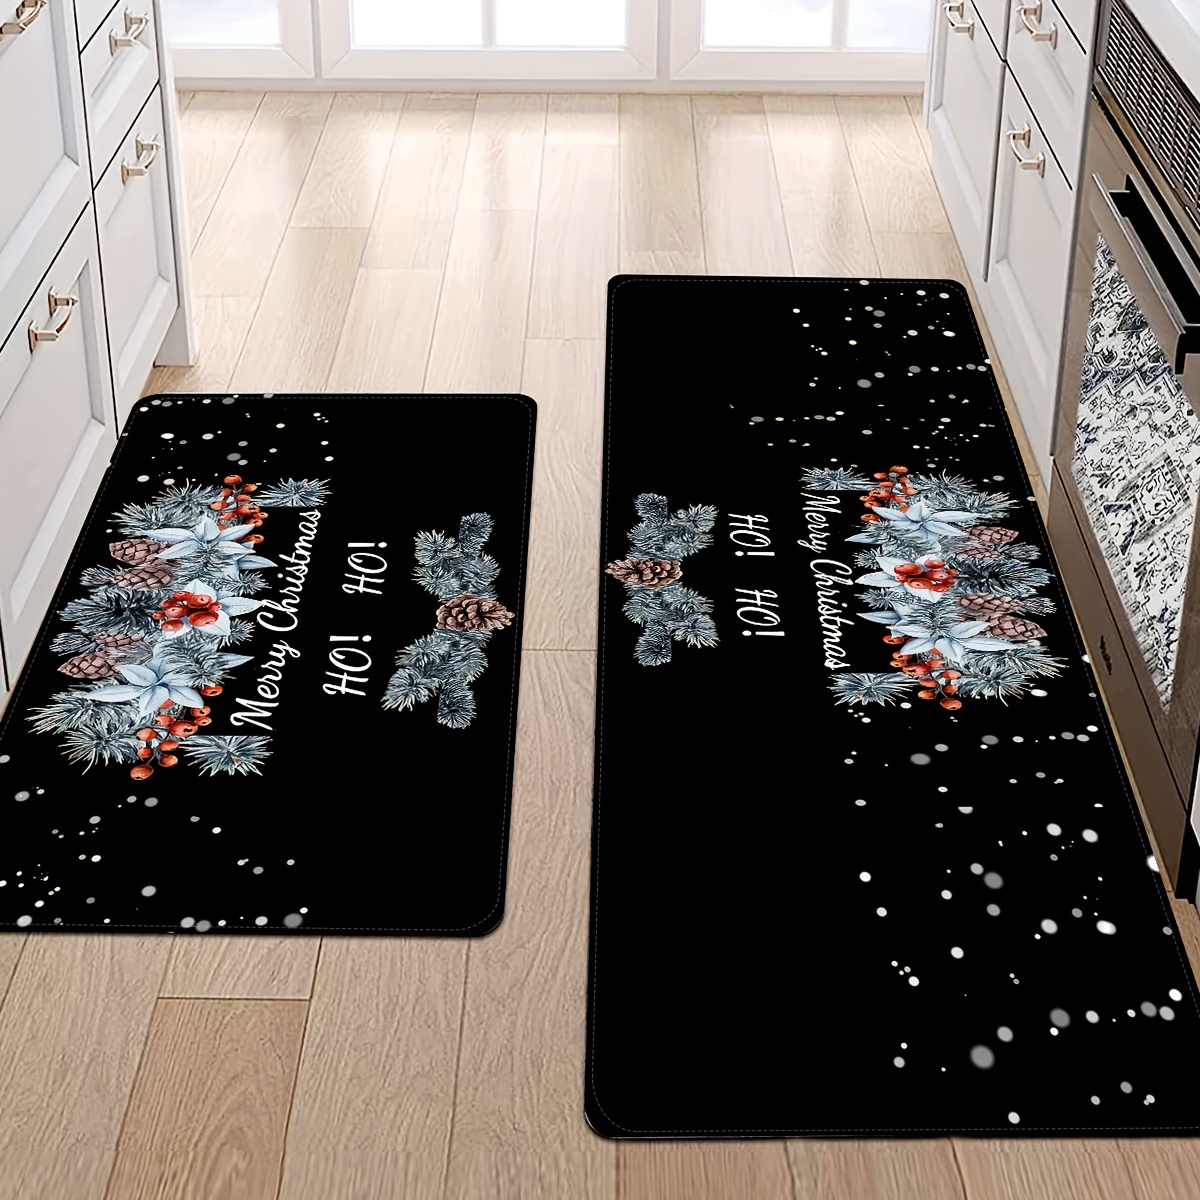 Fashion Santa Moose Kitchen Rug Set Merry Christmas Indoor Floor Mats for  Winter, Xmas Door Mat Runner Rug Carpet Mat for Kitchen Home Decor